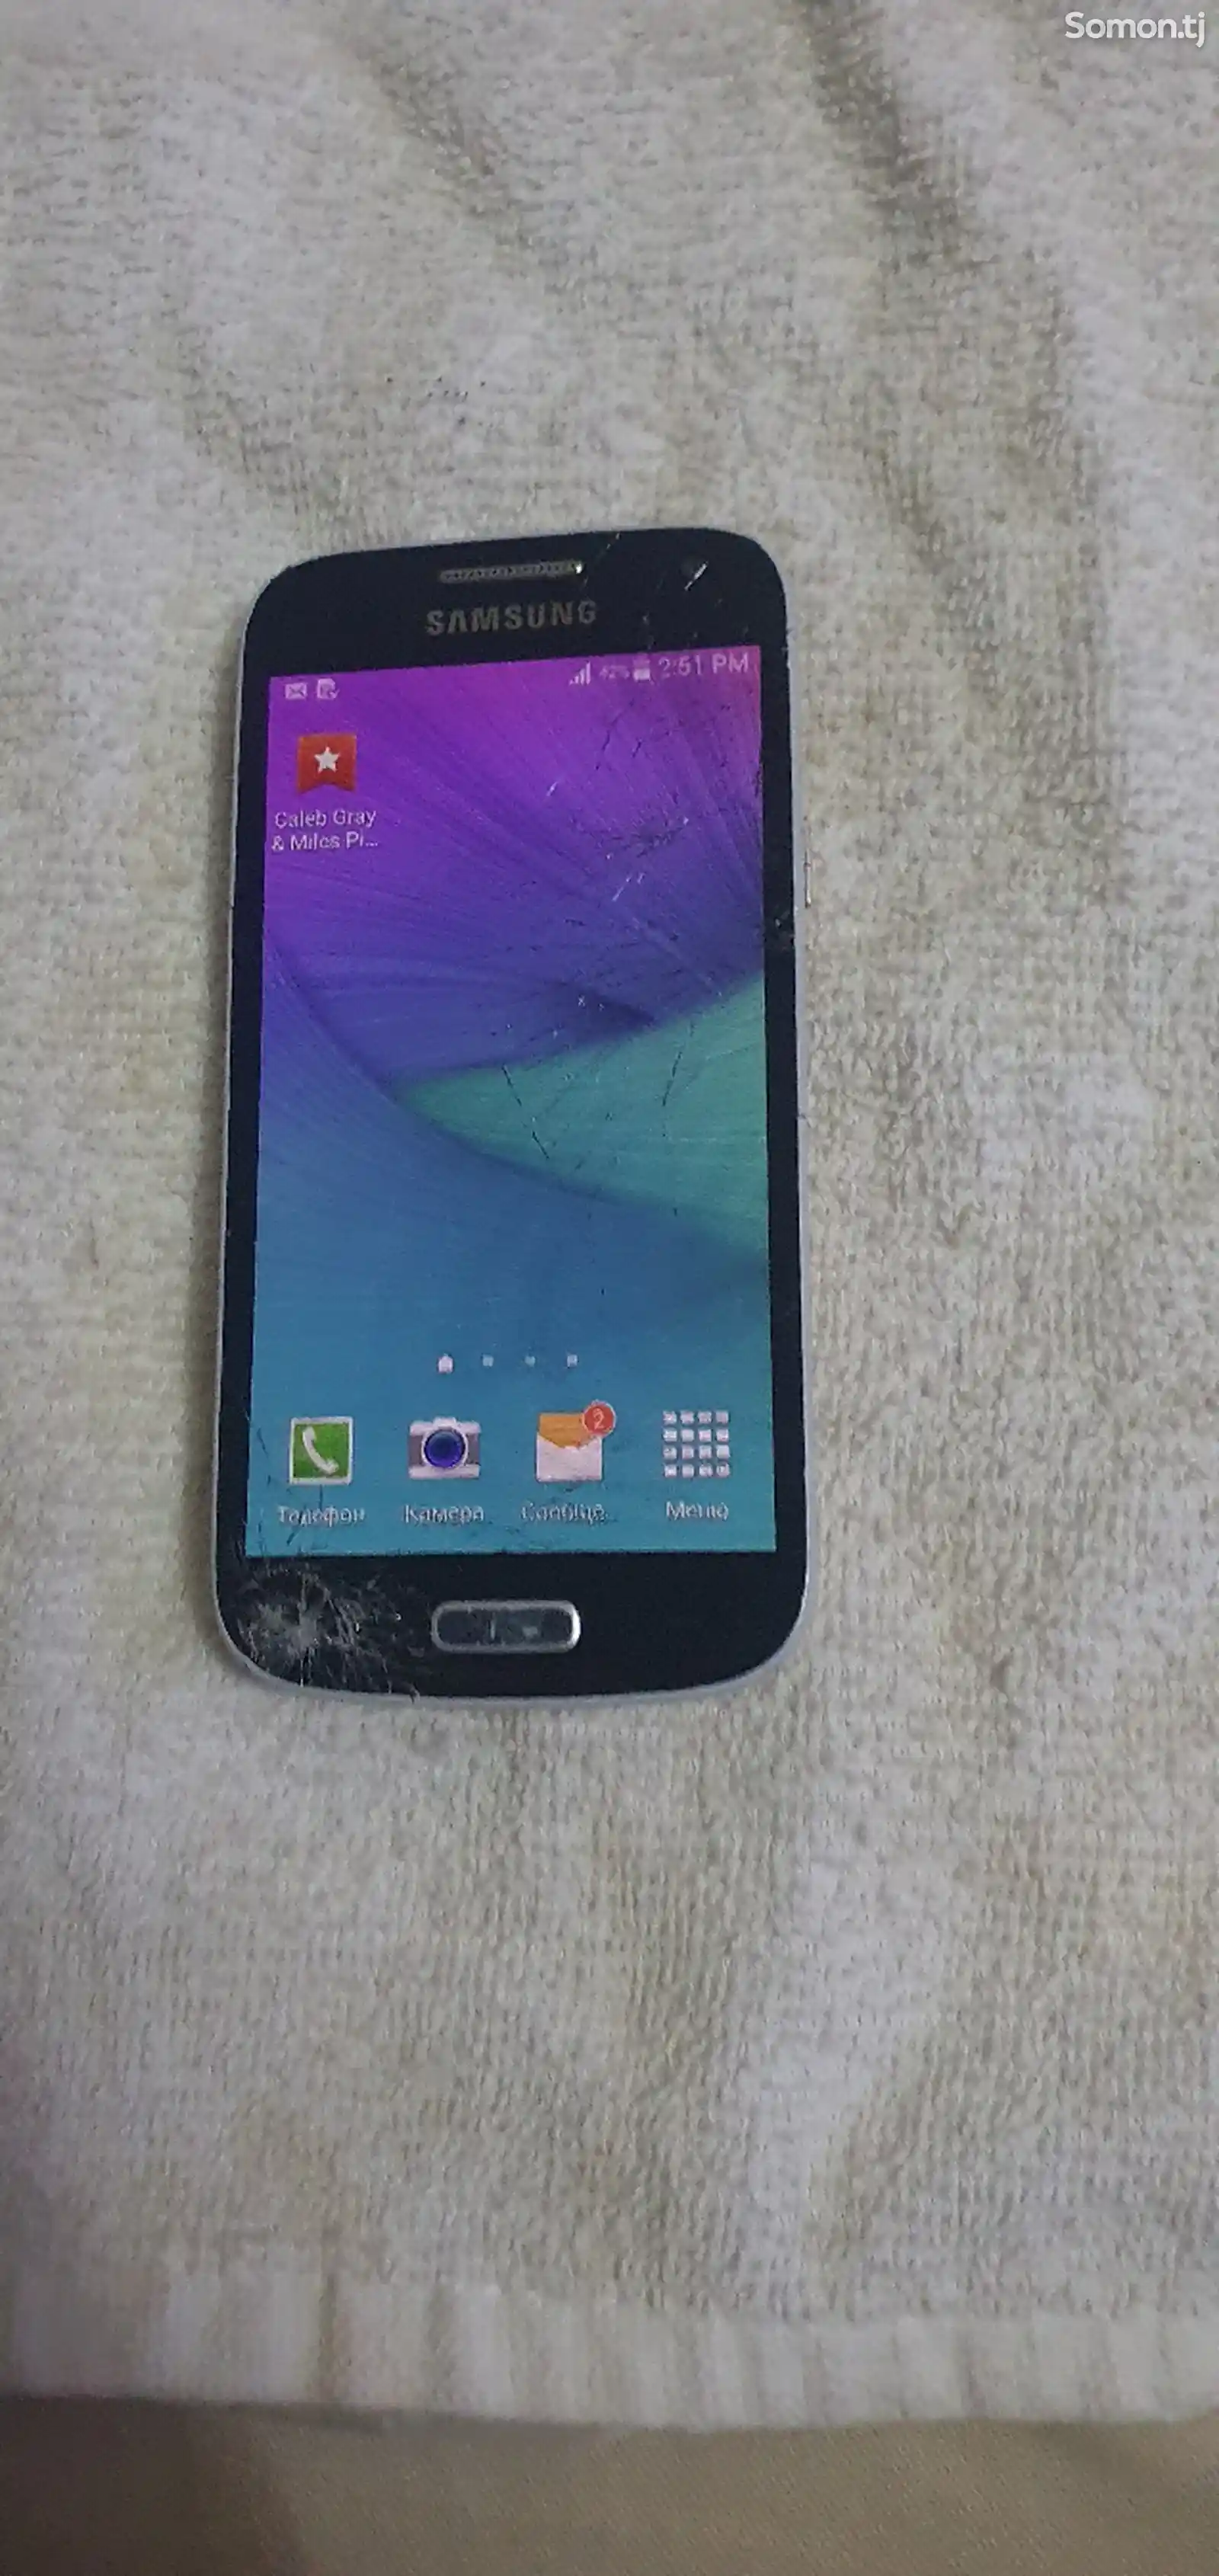 Samsung Galaxy S4 mini-2